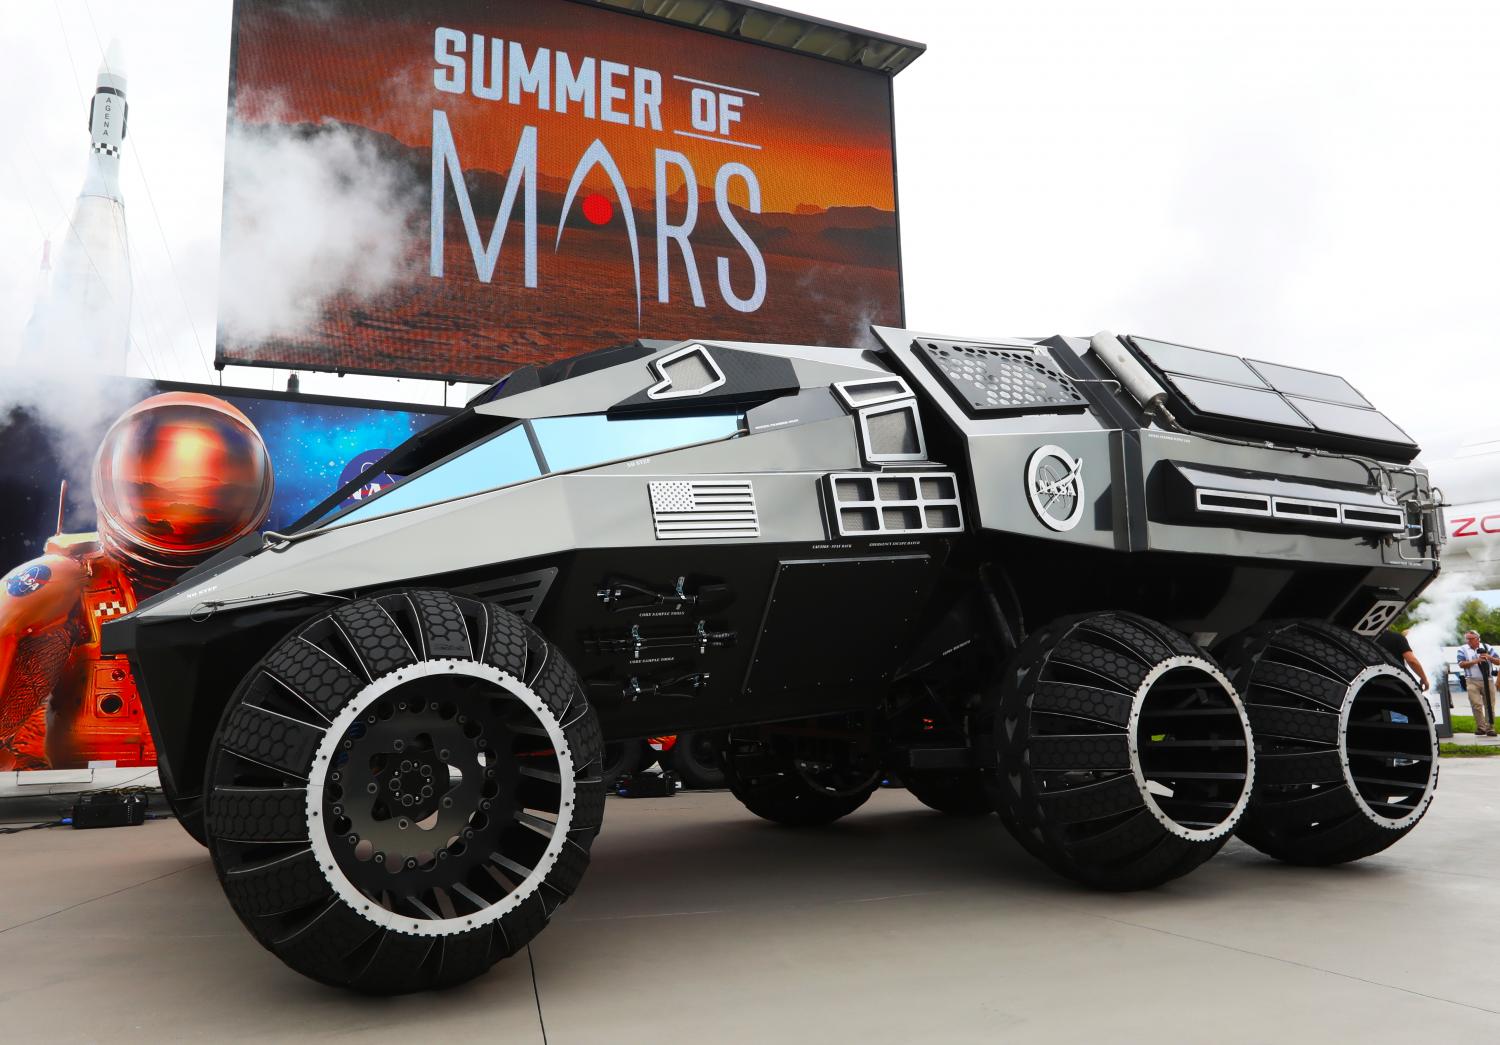 NASA unveils Mars rover concept vehicle